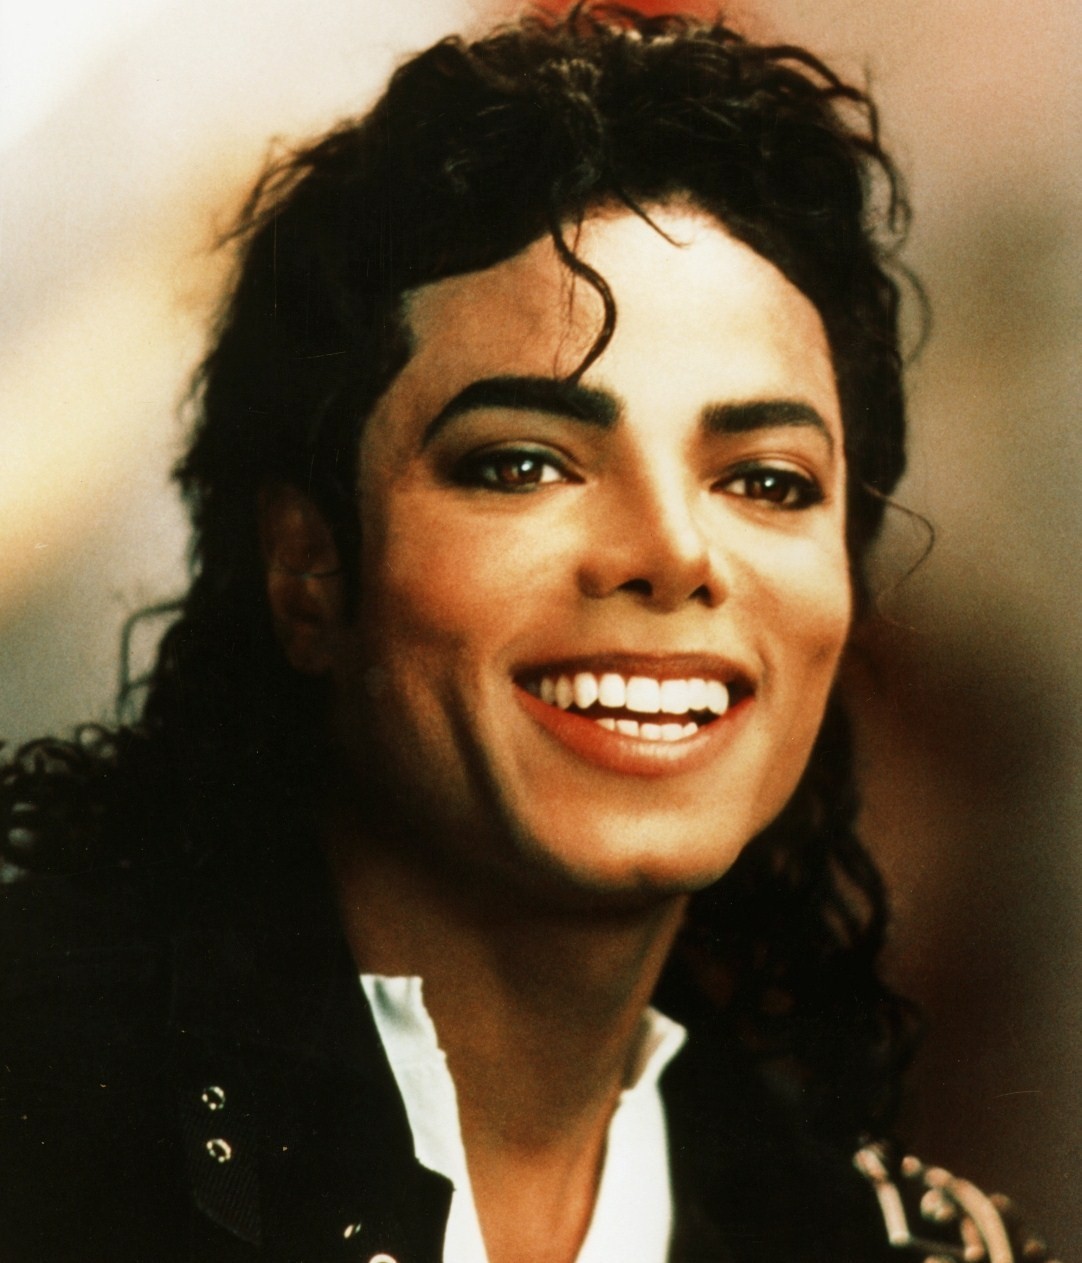 HQ Michael Jackson Wallpapers | File 211.91Kb